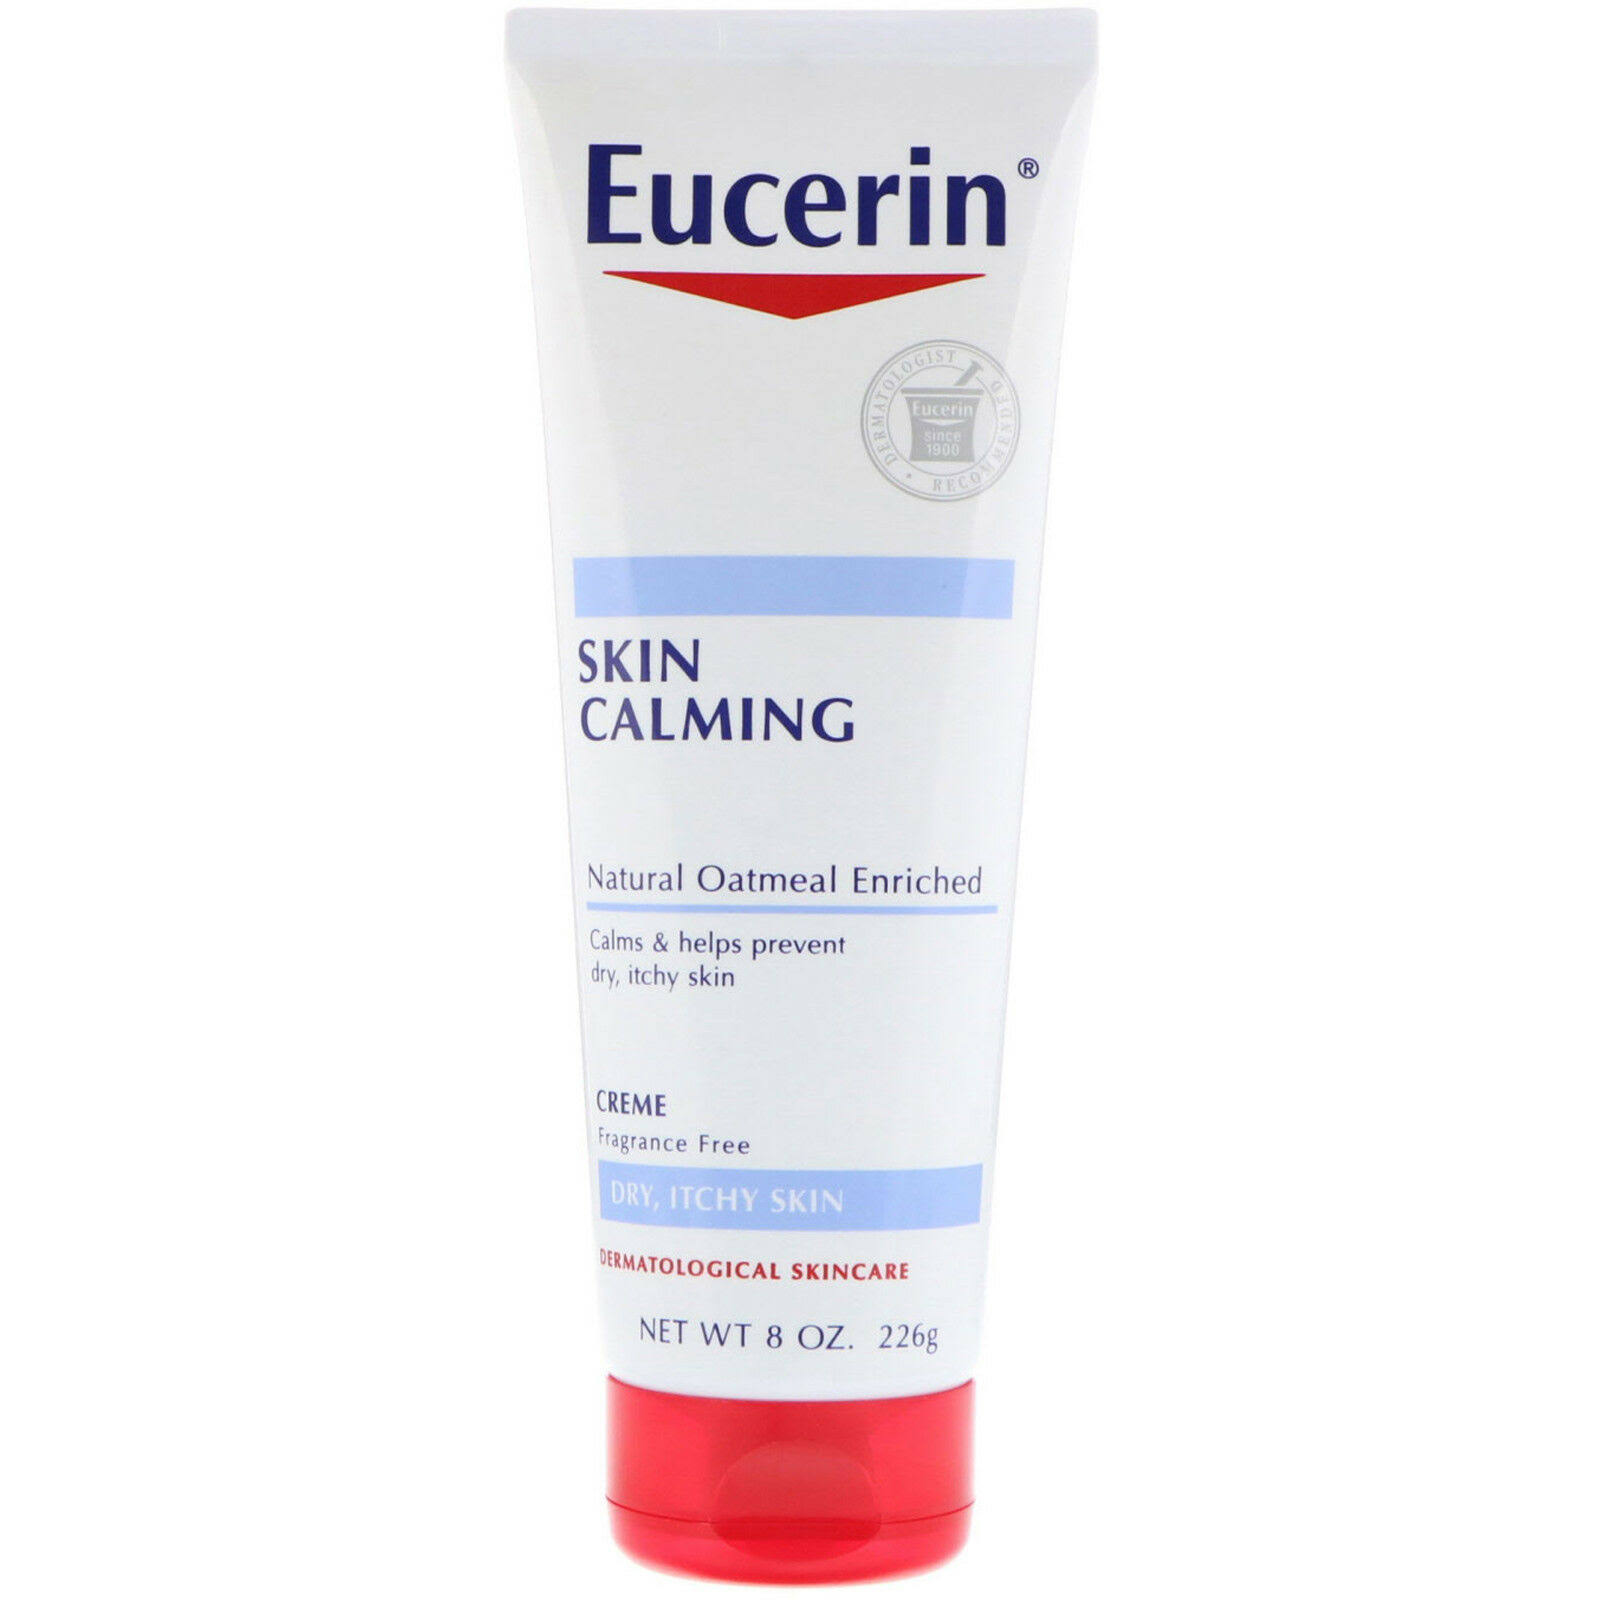 Eucerin Skin Calming Daily Moisturizing Creme - 8oz